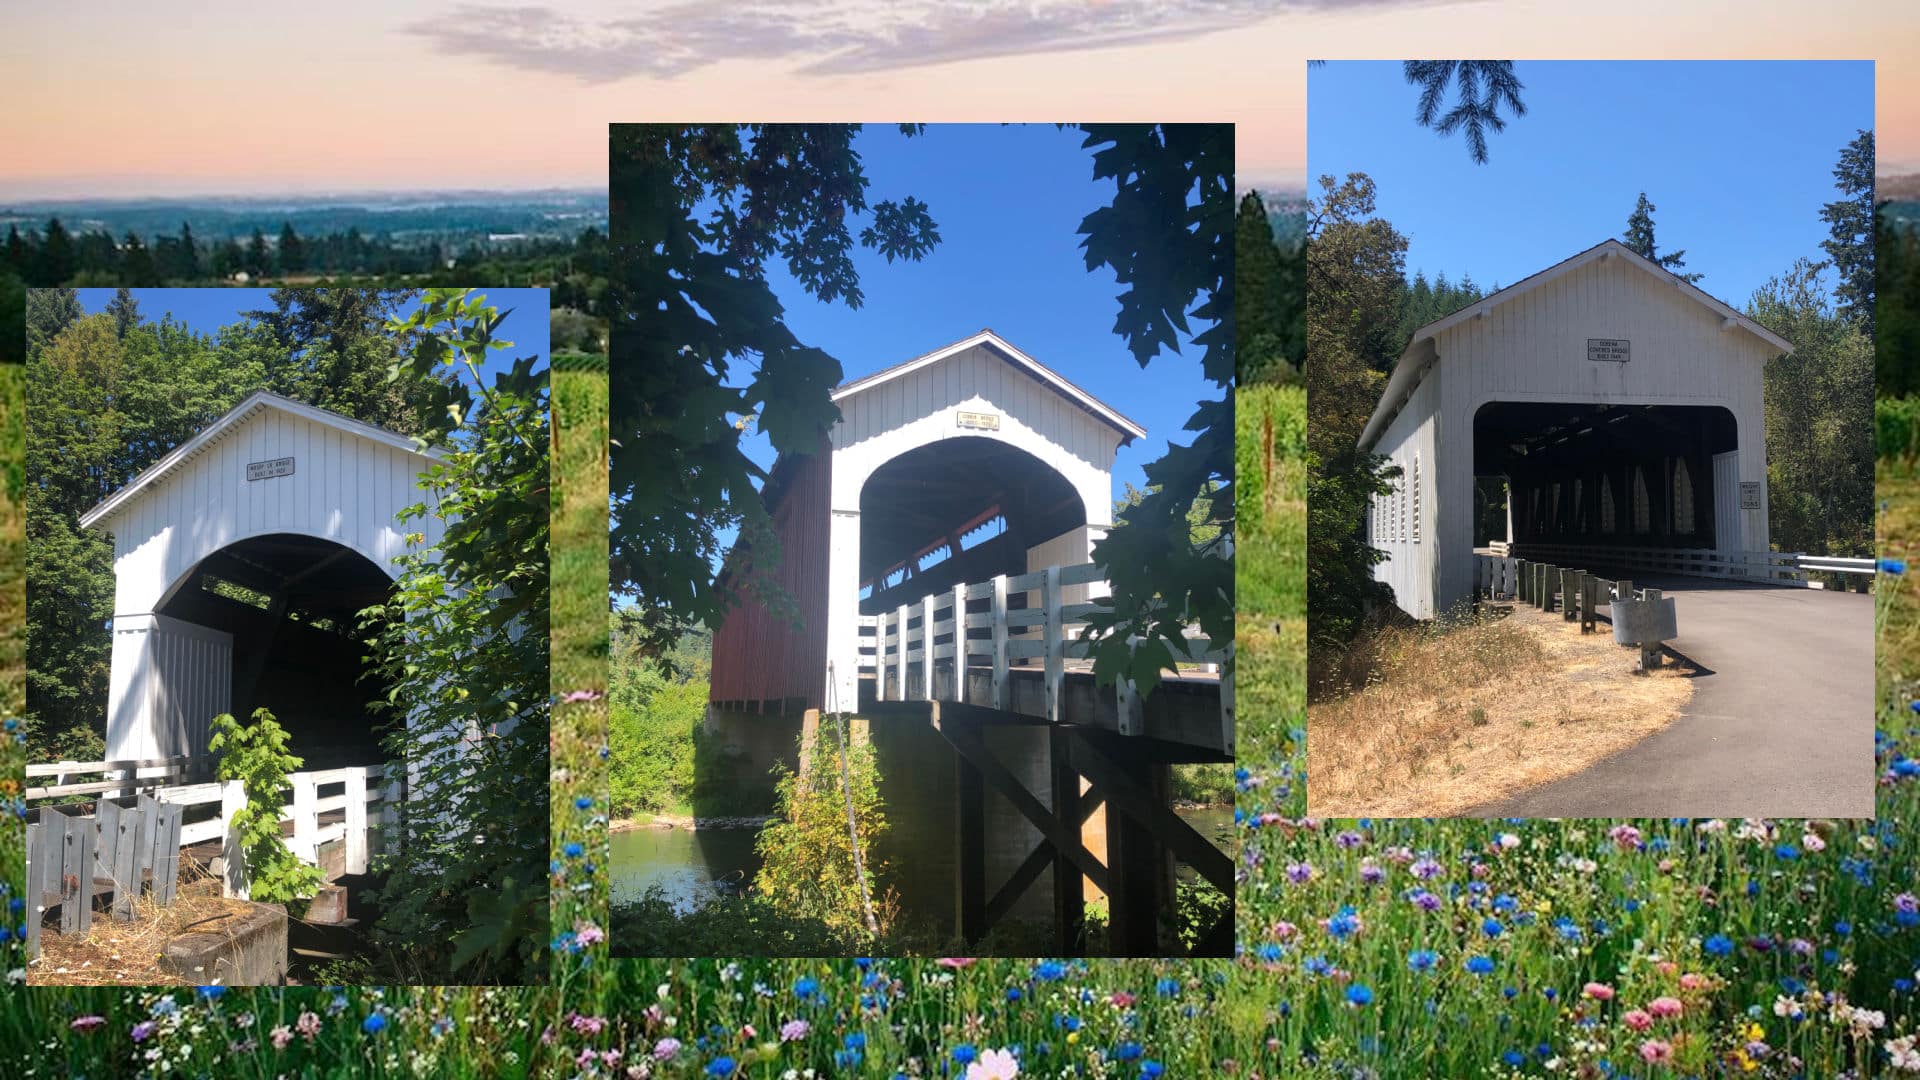 Cottage Grove Covered Bridge Tours